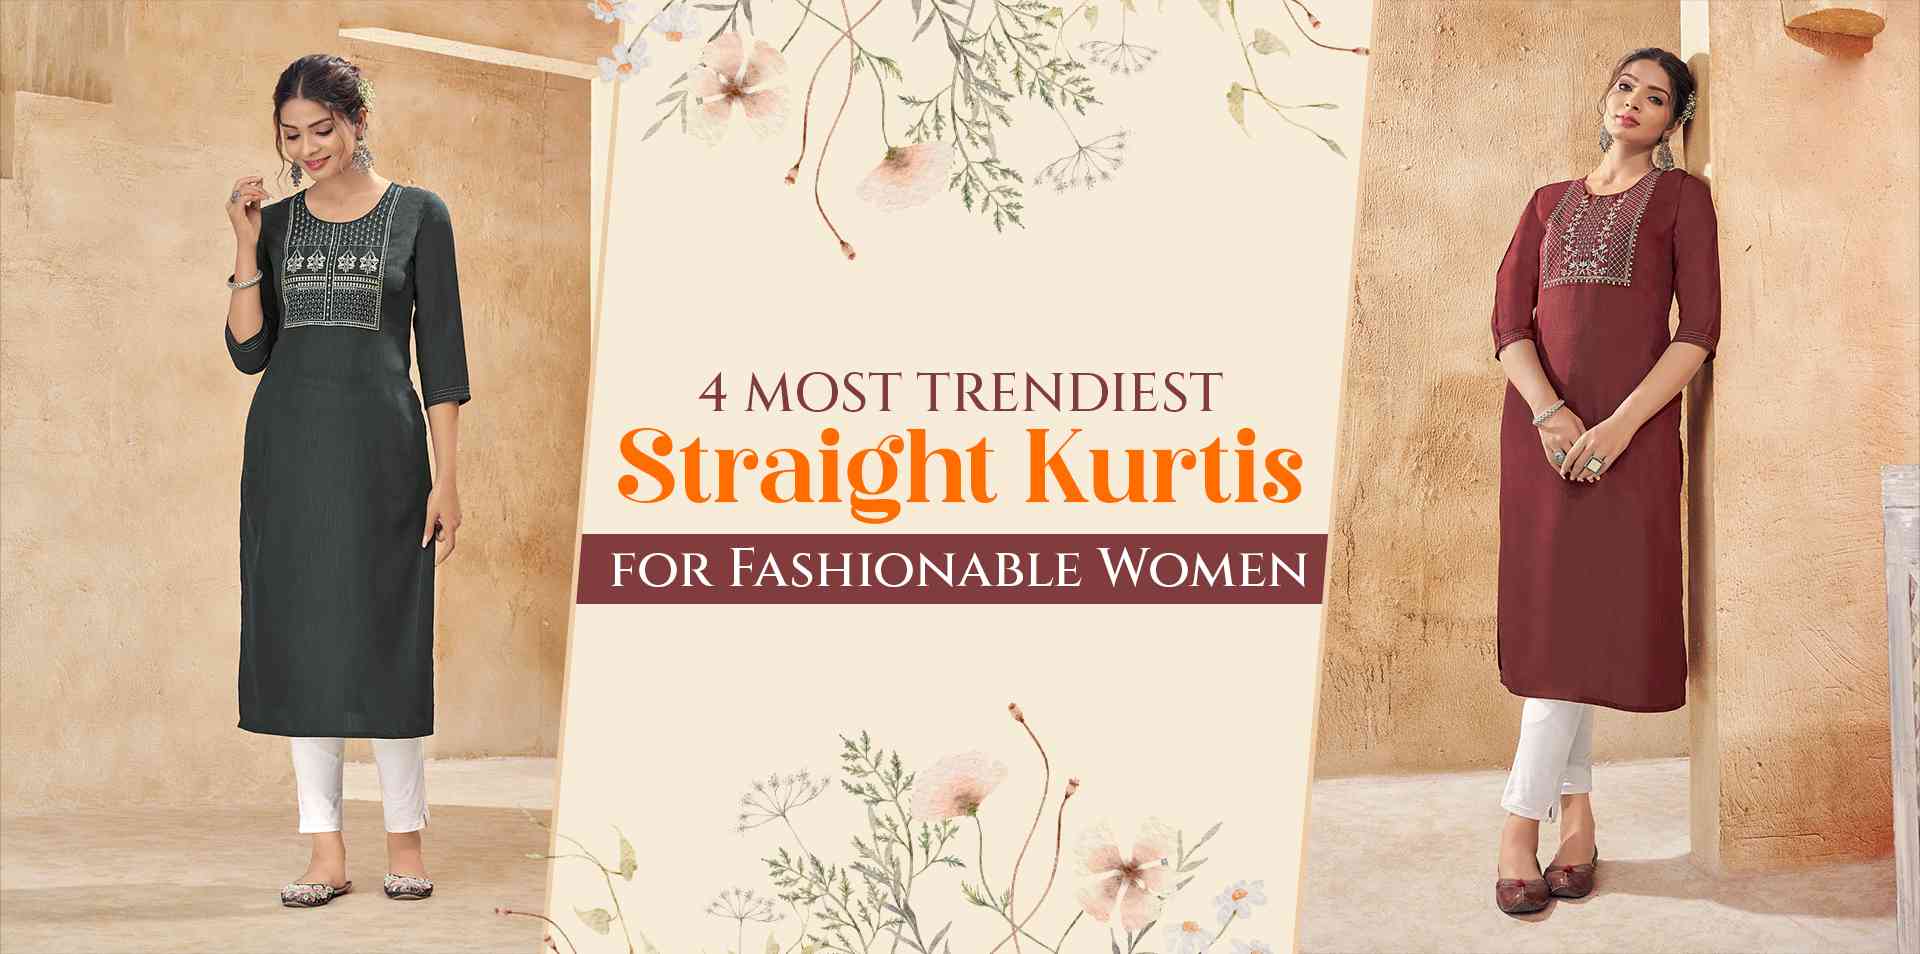 4 Most Trendiest Straight Kurtis for Fashionable Women